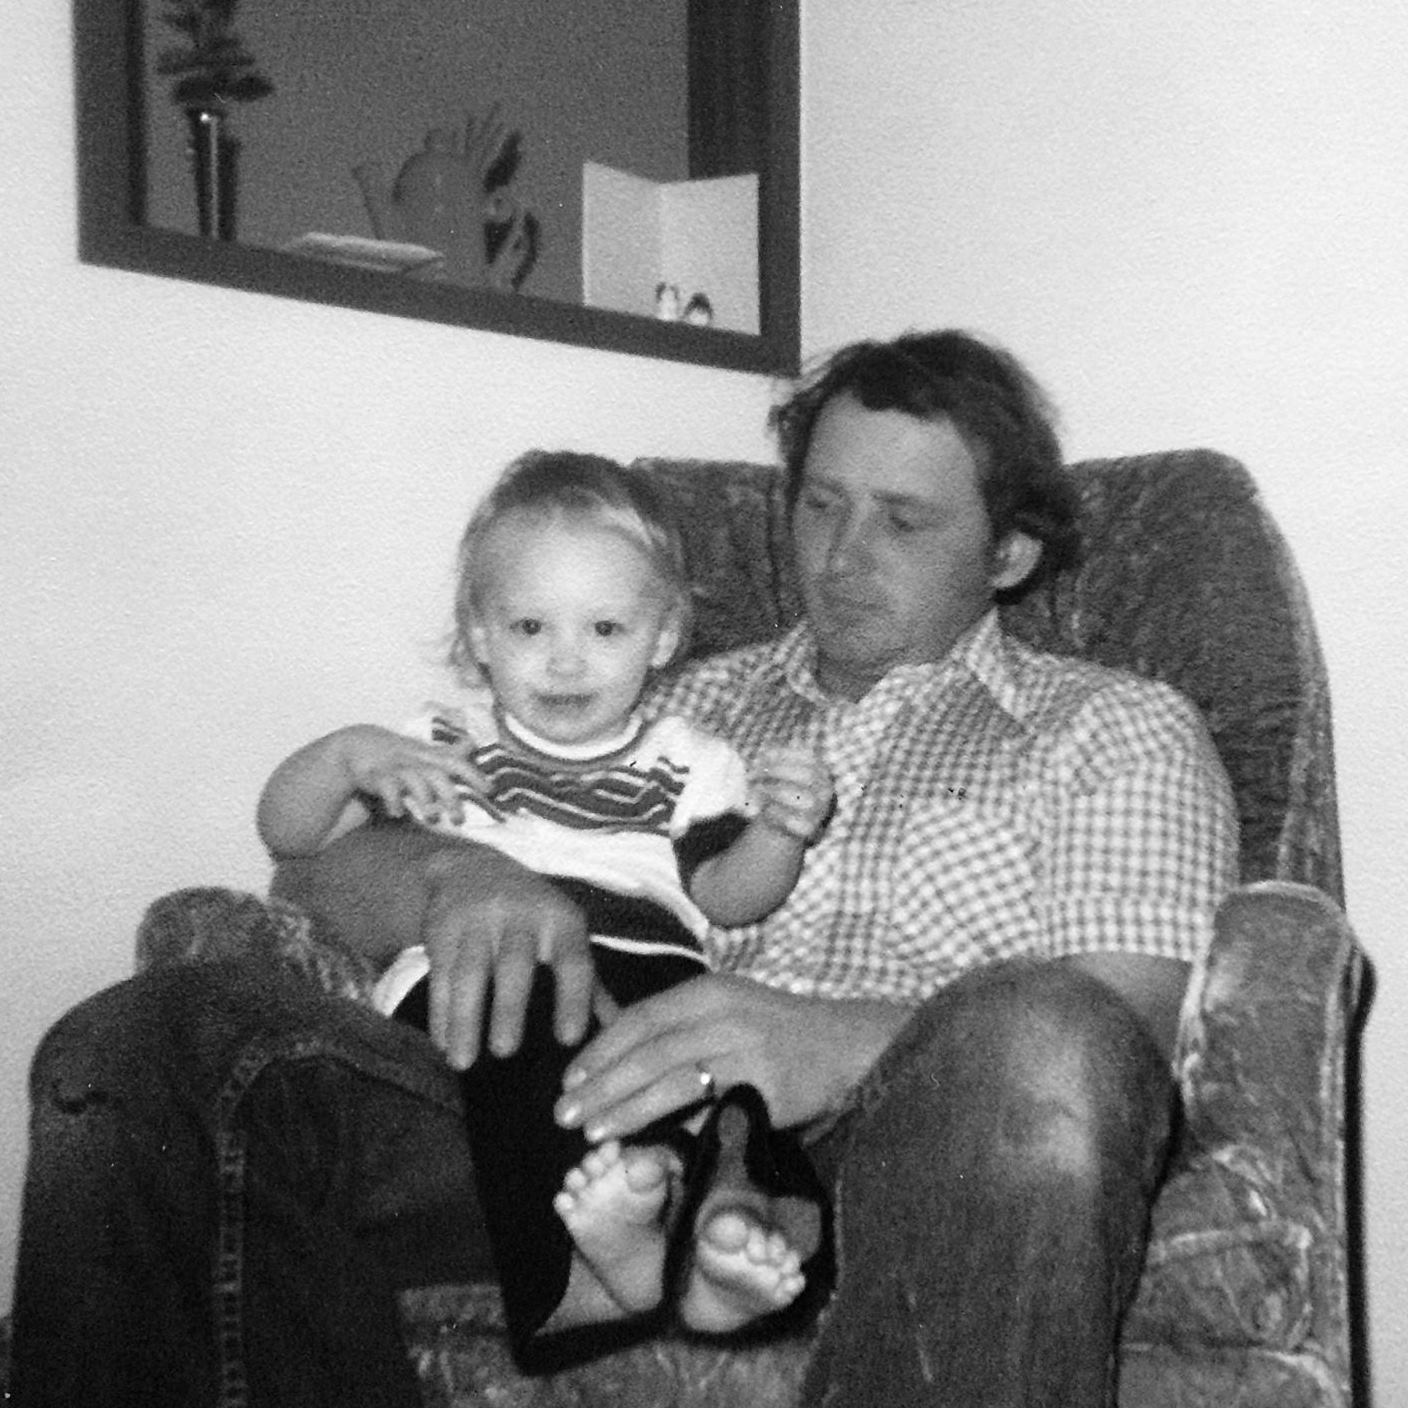 Circa 1979 black and white photo